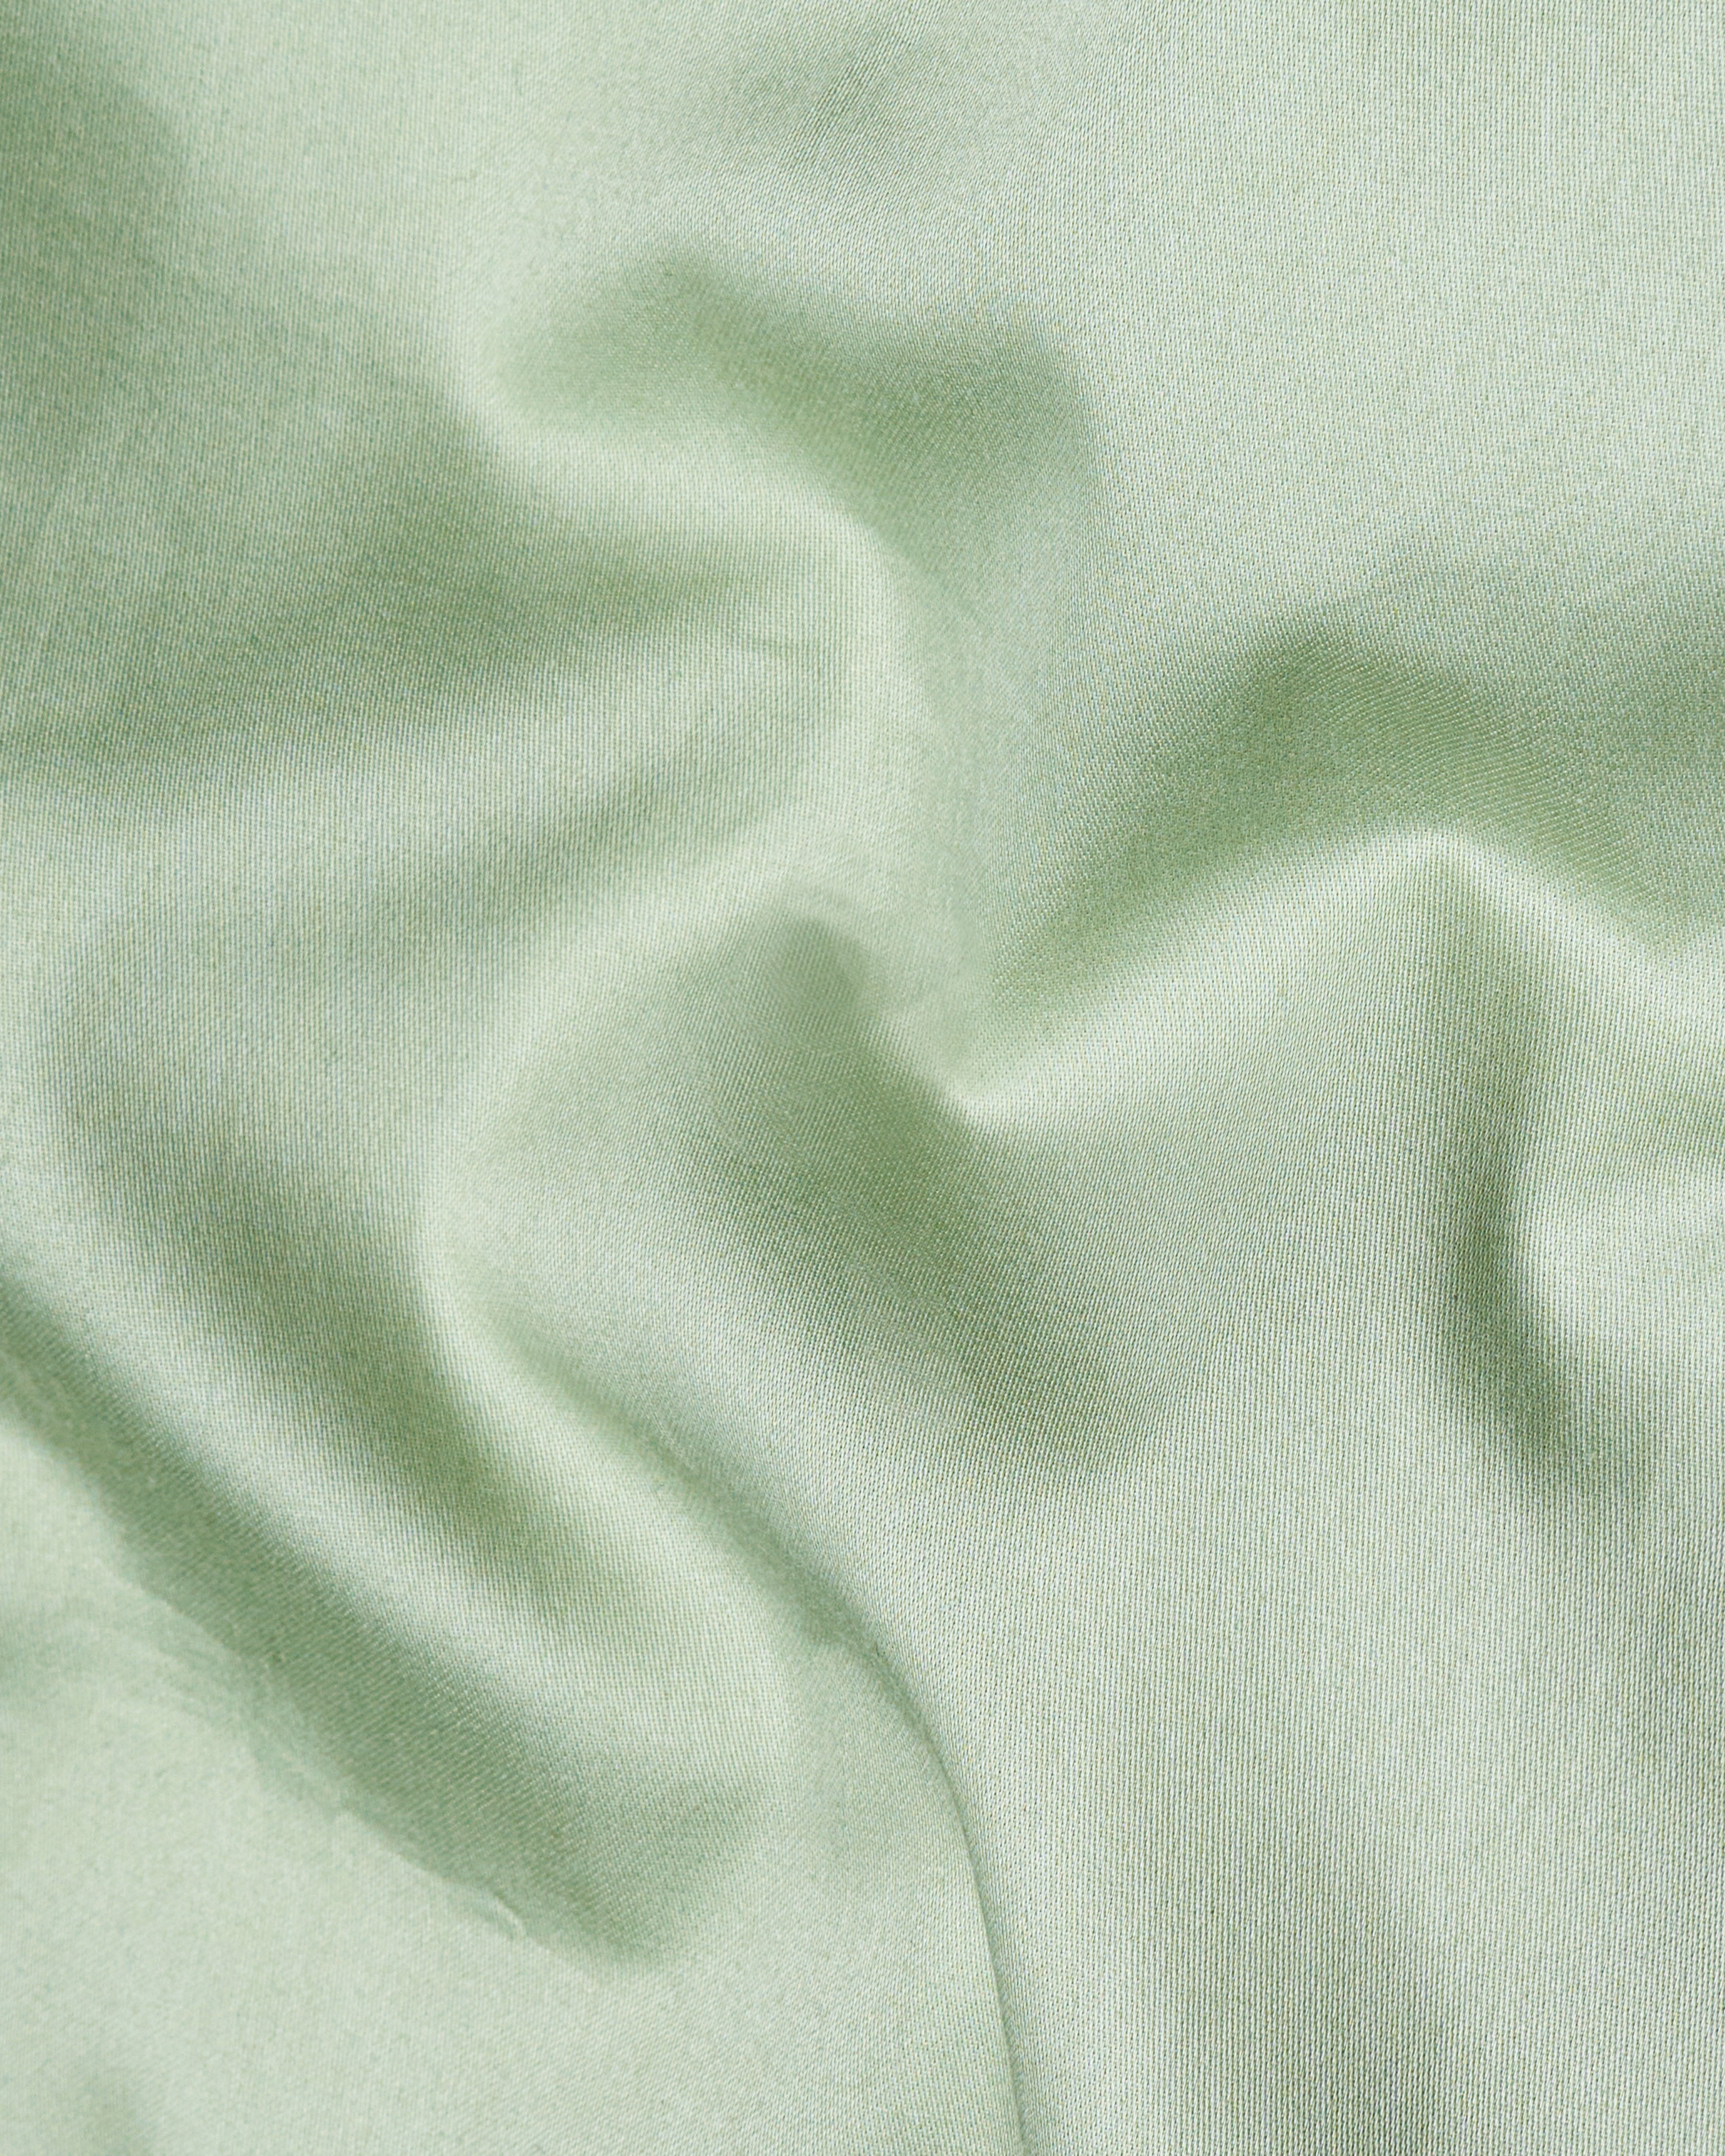 Coriander Green Subtle Sheen Snake Pleated Super Soft Premium Cotton Tuxedo Shirt 8664-BLK-TXD-38, 8664-BLK-TXD-H-38, 8664-BLK-TXD-39, 8664-BLK-TXD-H-39, 8664-BLK-TXD-40, 8664-BLK-TXD-H-40, 8664-BLK-TXD-42, 8664-BLK-TXD-H-42, 8664-BLK-TXD-44, 8664-BLK-TXD-H-44, 8664-BLK-TXD-46, 8664-BLK-TXD-H-46, 8664-BLK-TXD-48, 8664-BLK-TXD-H-48, 8664-BLK-TXD-50, 8664-BLK-TXD-H-50, 8664-BLK-TXD-52, 8664-BLK-TXD-H-52